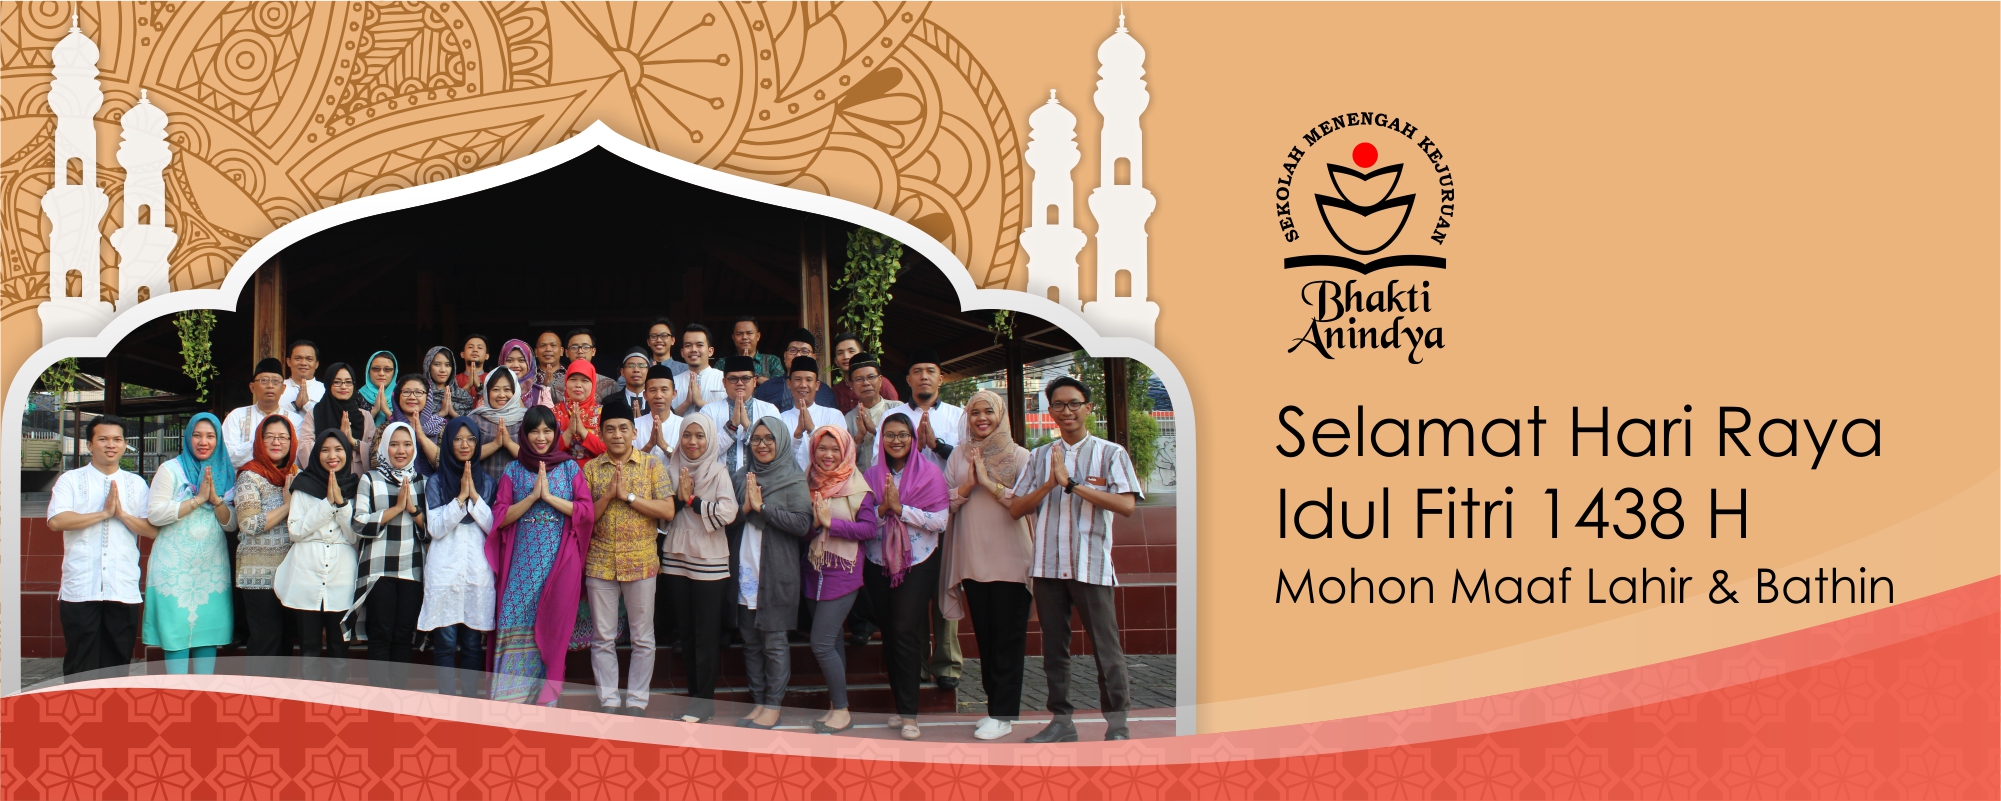 Selamat Hari Raya Idul Fitri 1438 H SMK Bhakti Anindya Tangerang